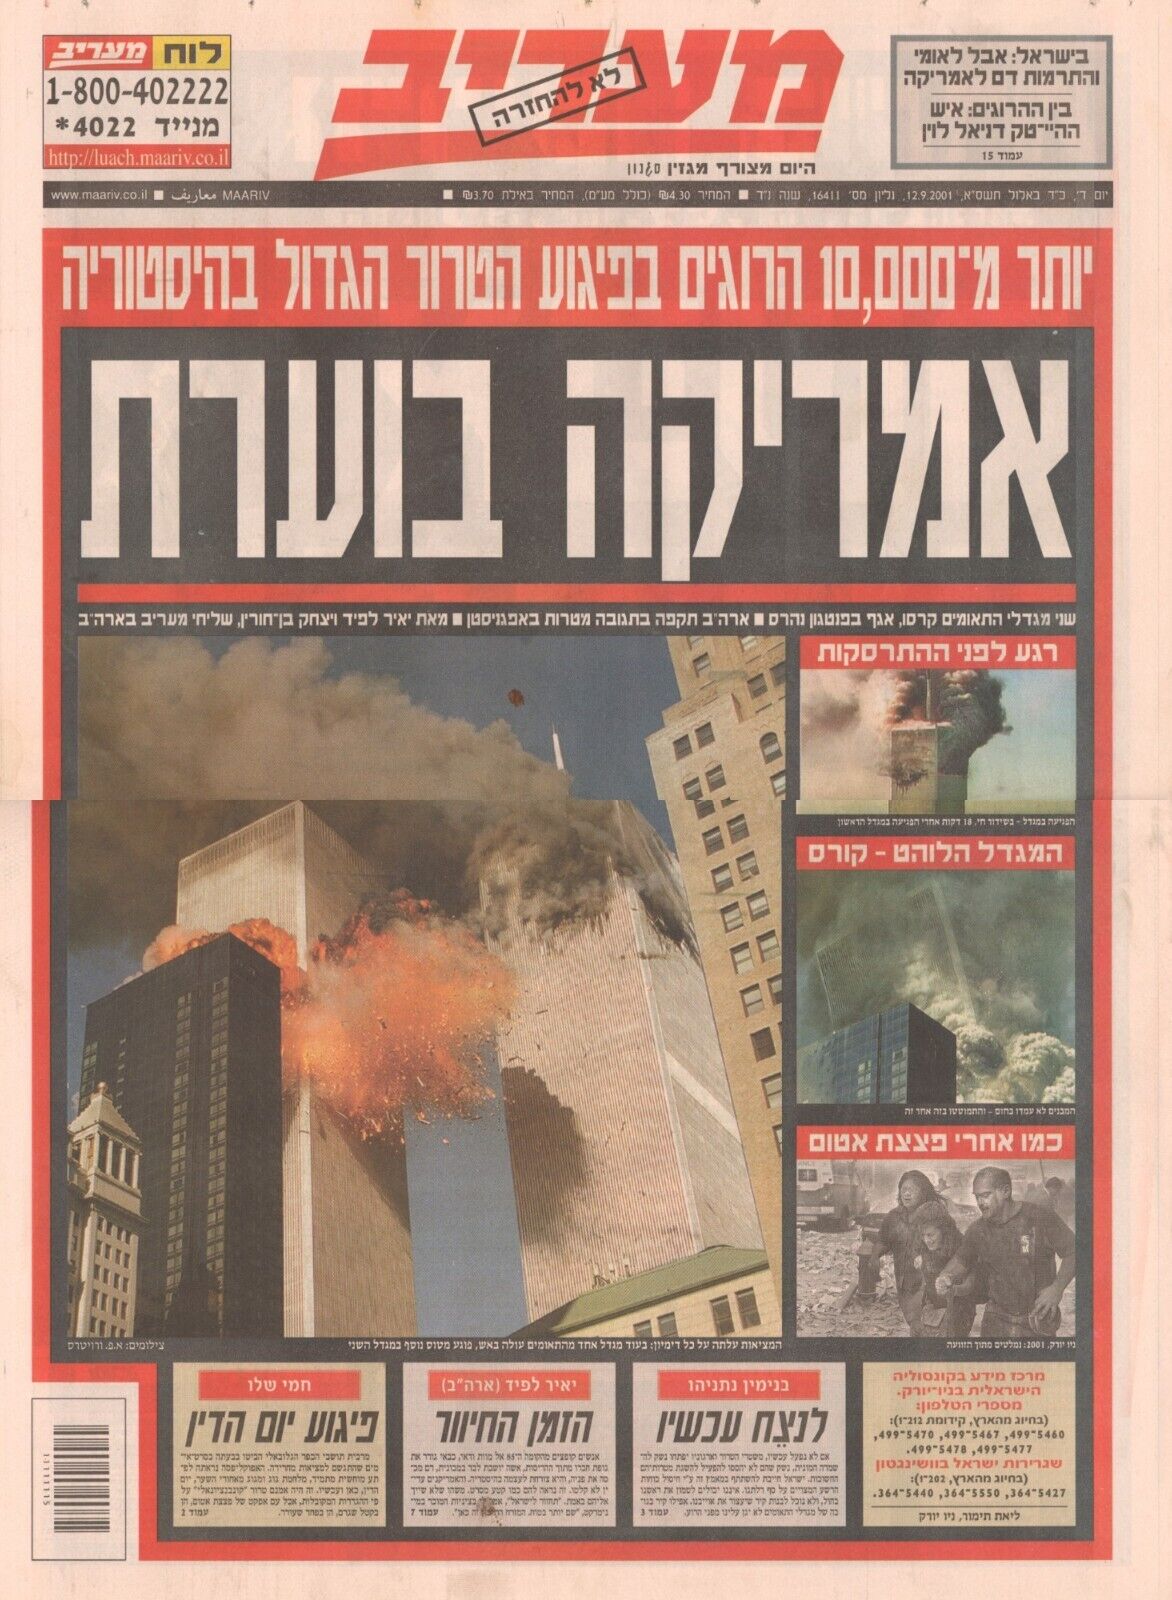 9/11 september 11th attacks Israeli Hebrew Newspaper \